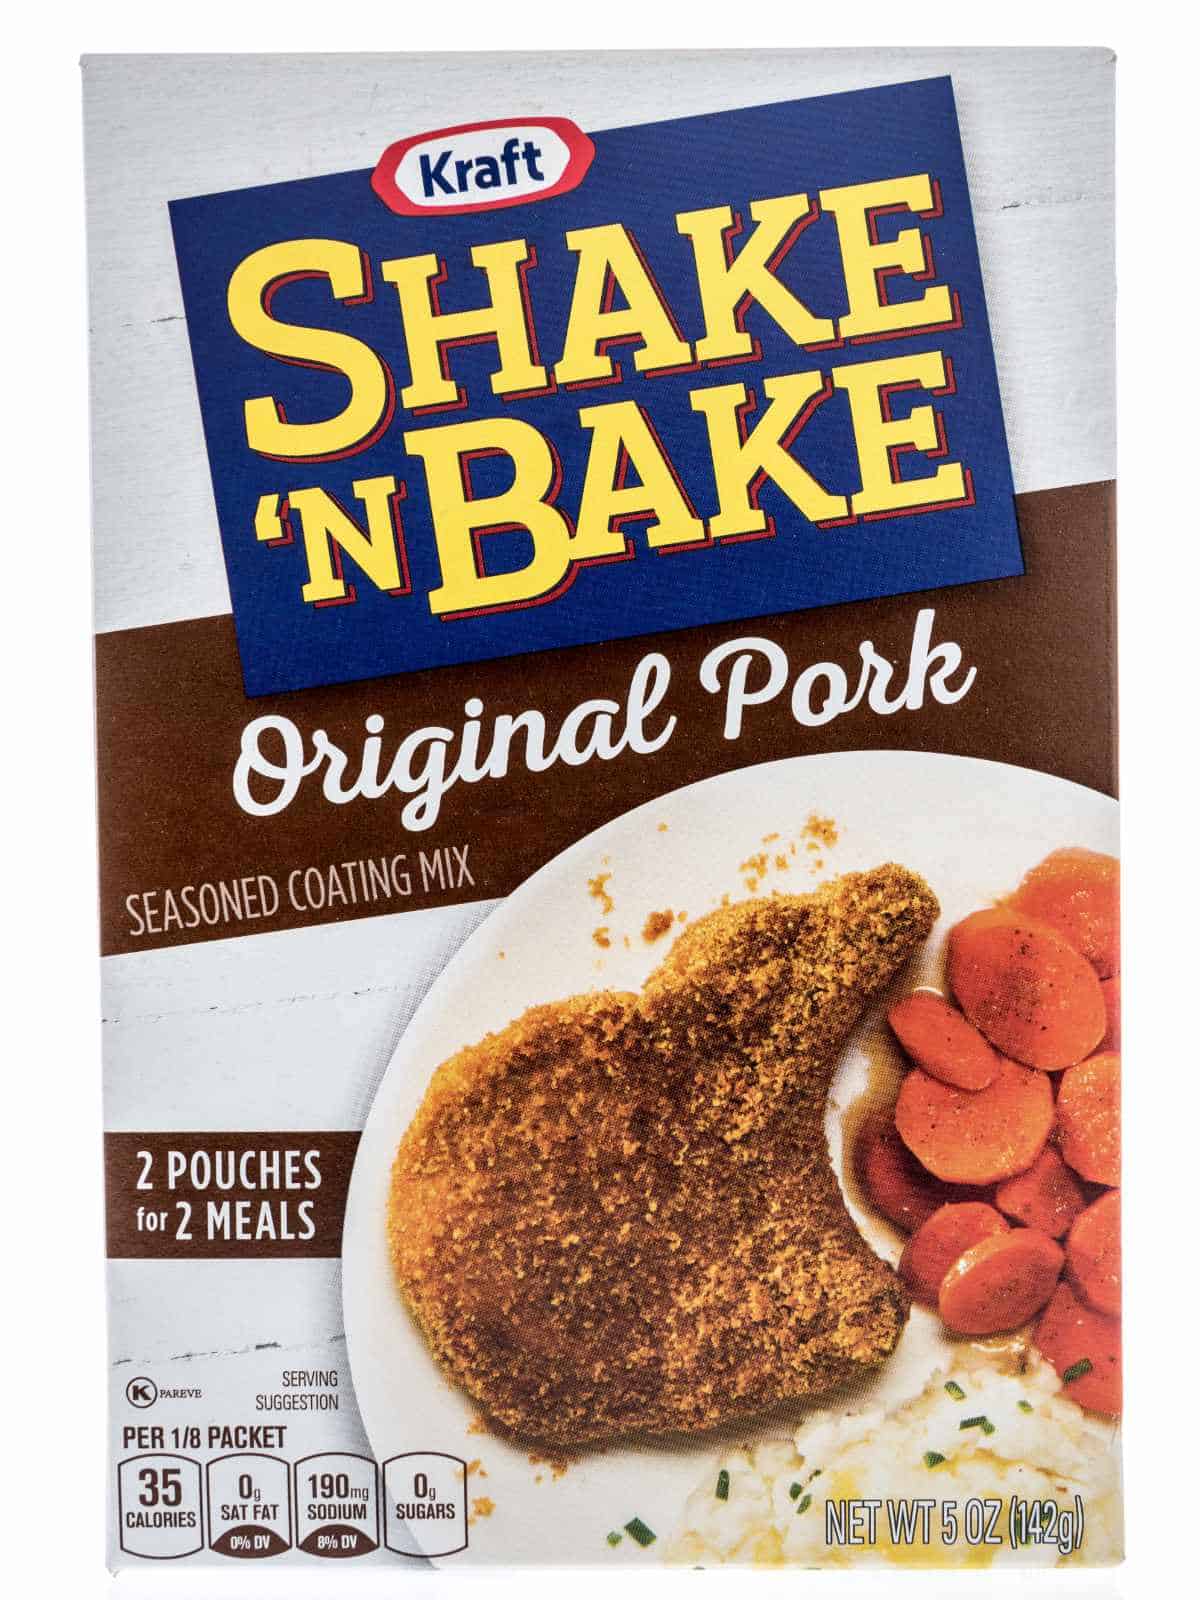 box of shake n bake for pork.